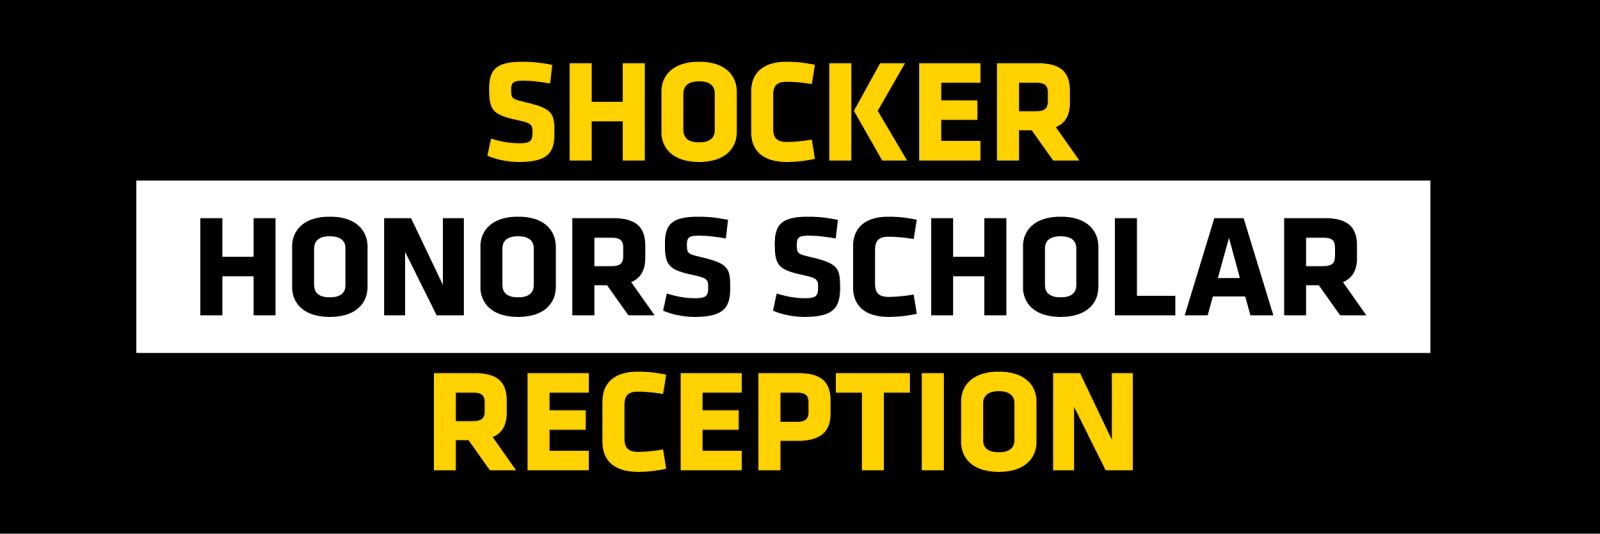 Shocker Honors Scholar Reception